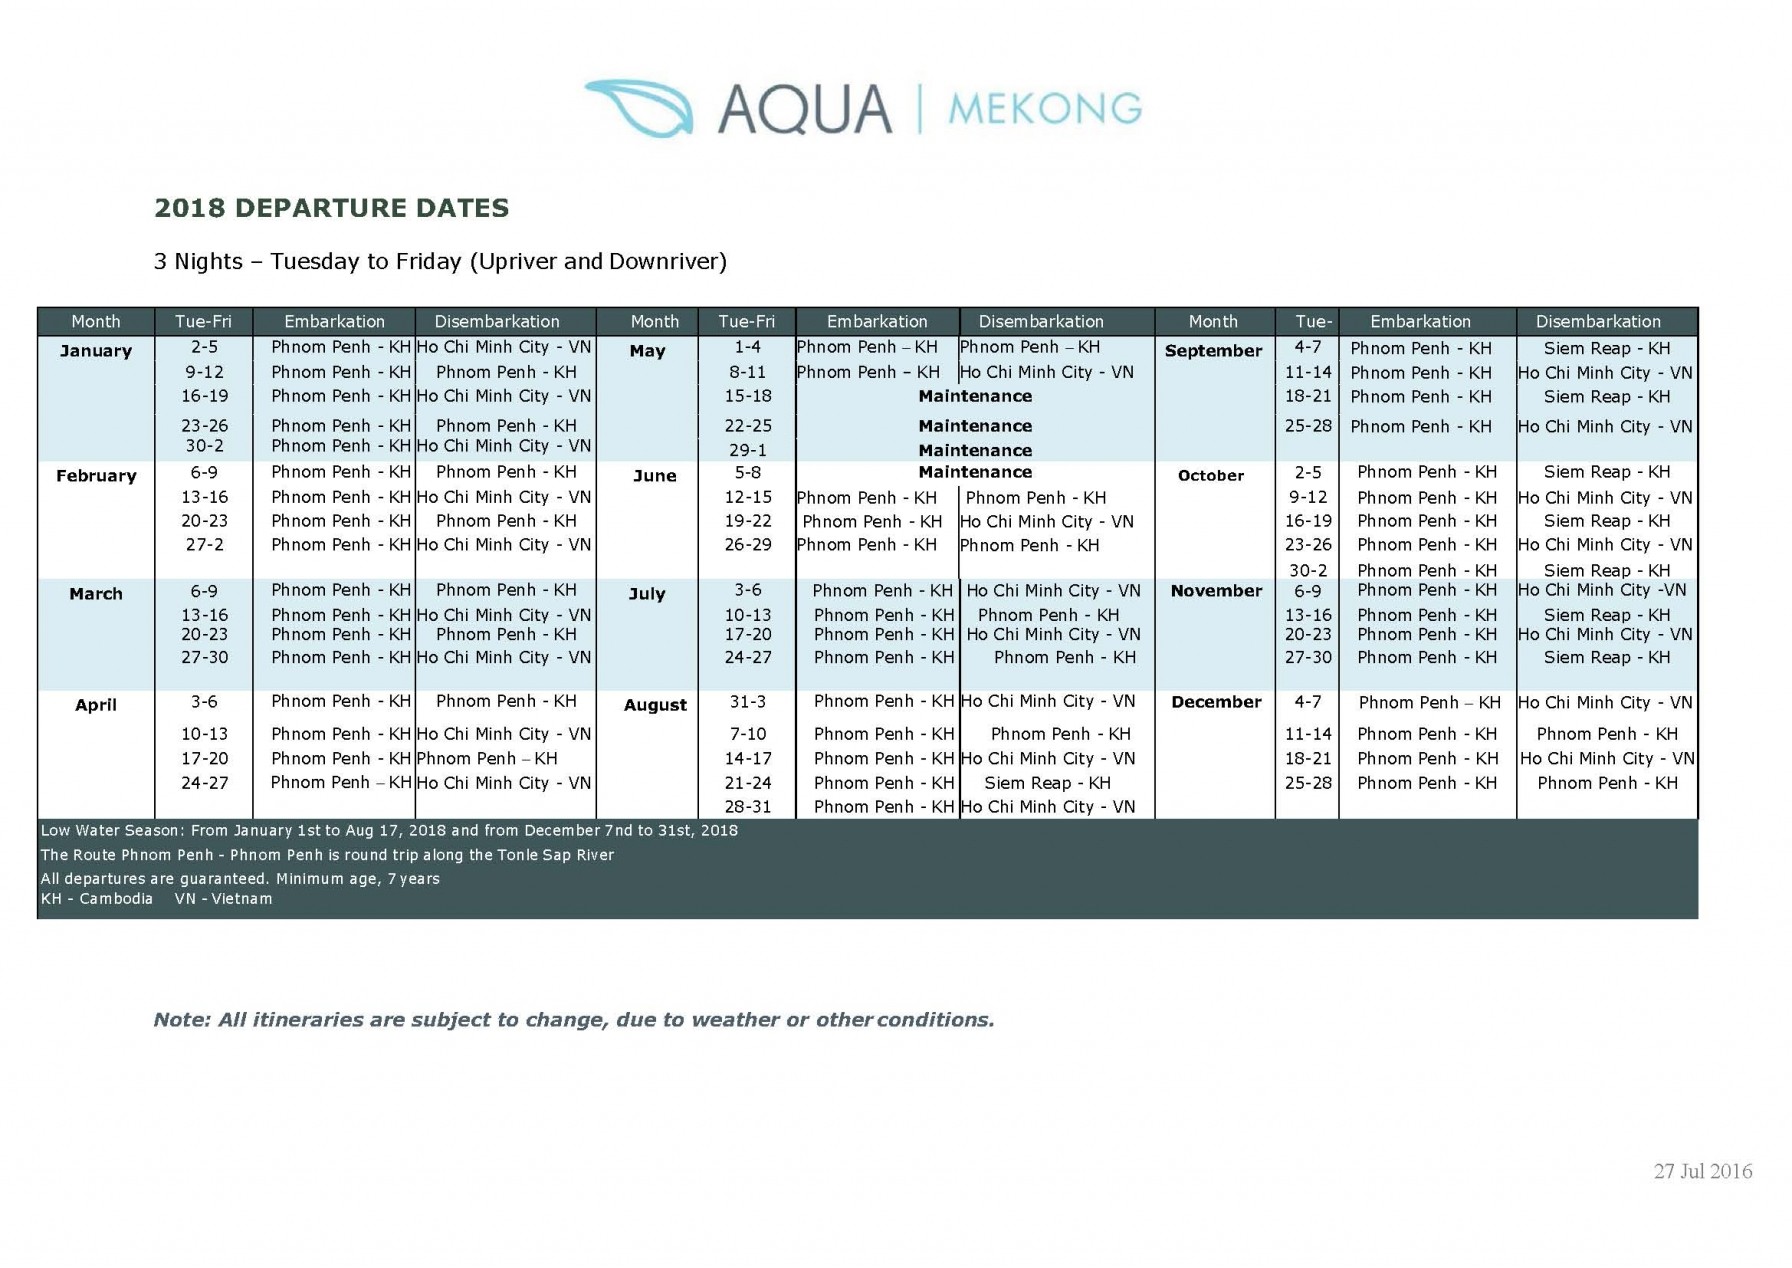 AQUA MEKONG - 2018 Departure Dates_Page_3.jpg